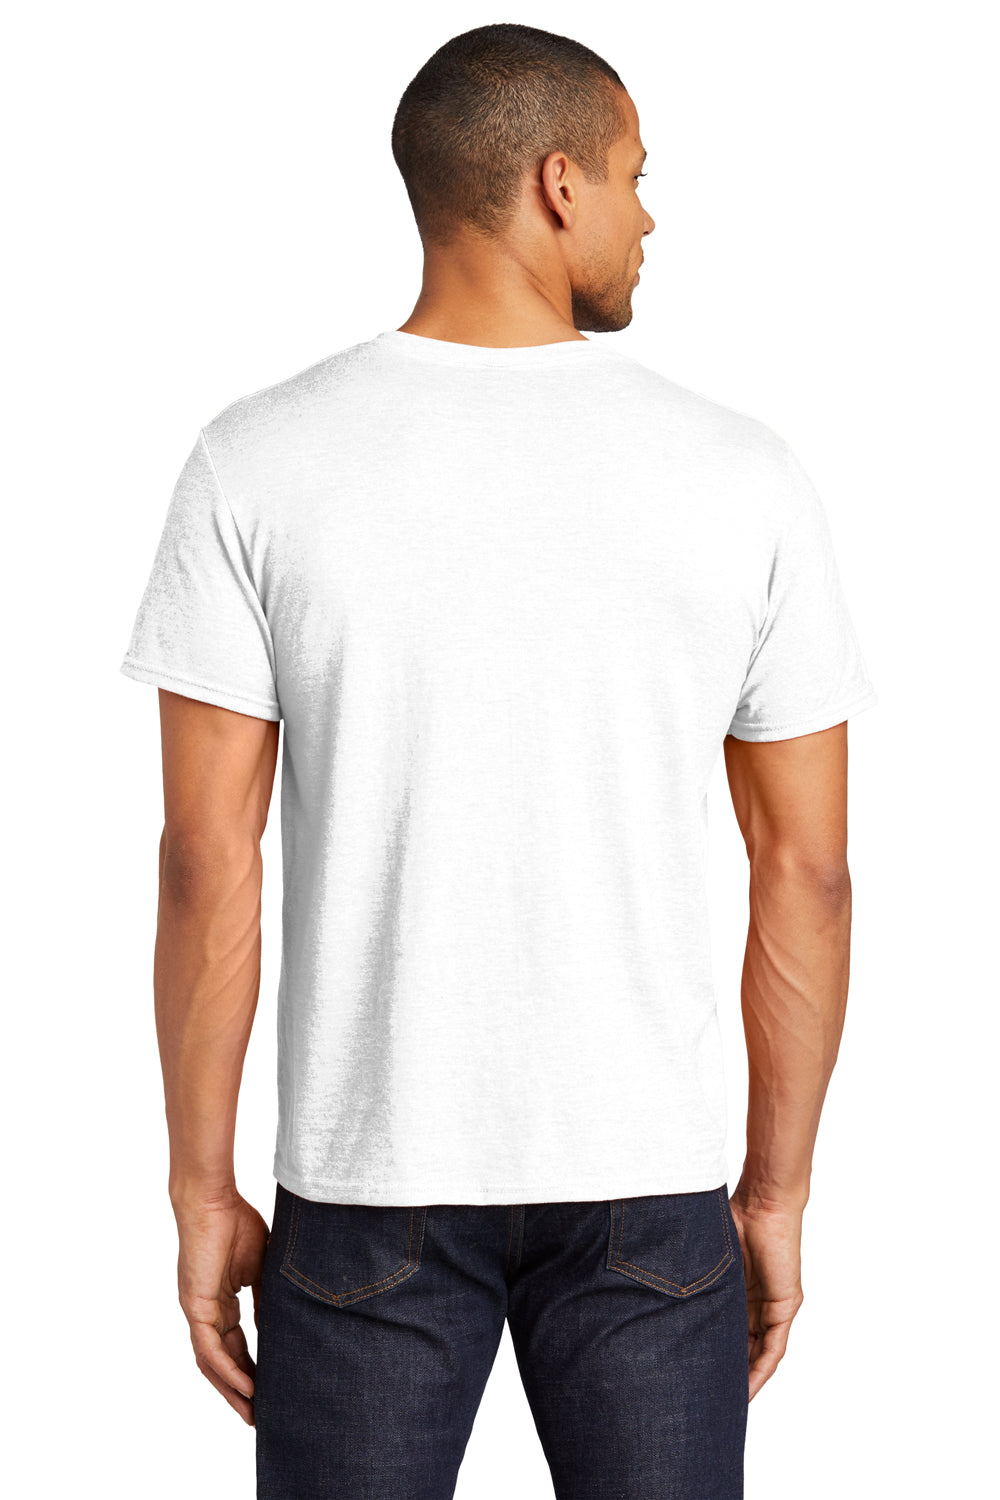 Jerzees 560M Mens Premium Blend Ring Spun Short Sleeve Crewneck T-Shirt White Back